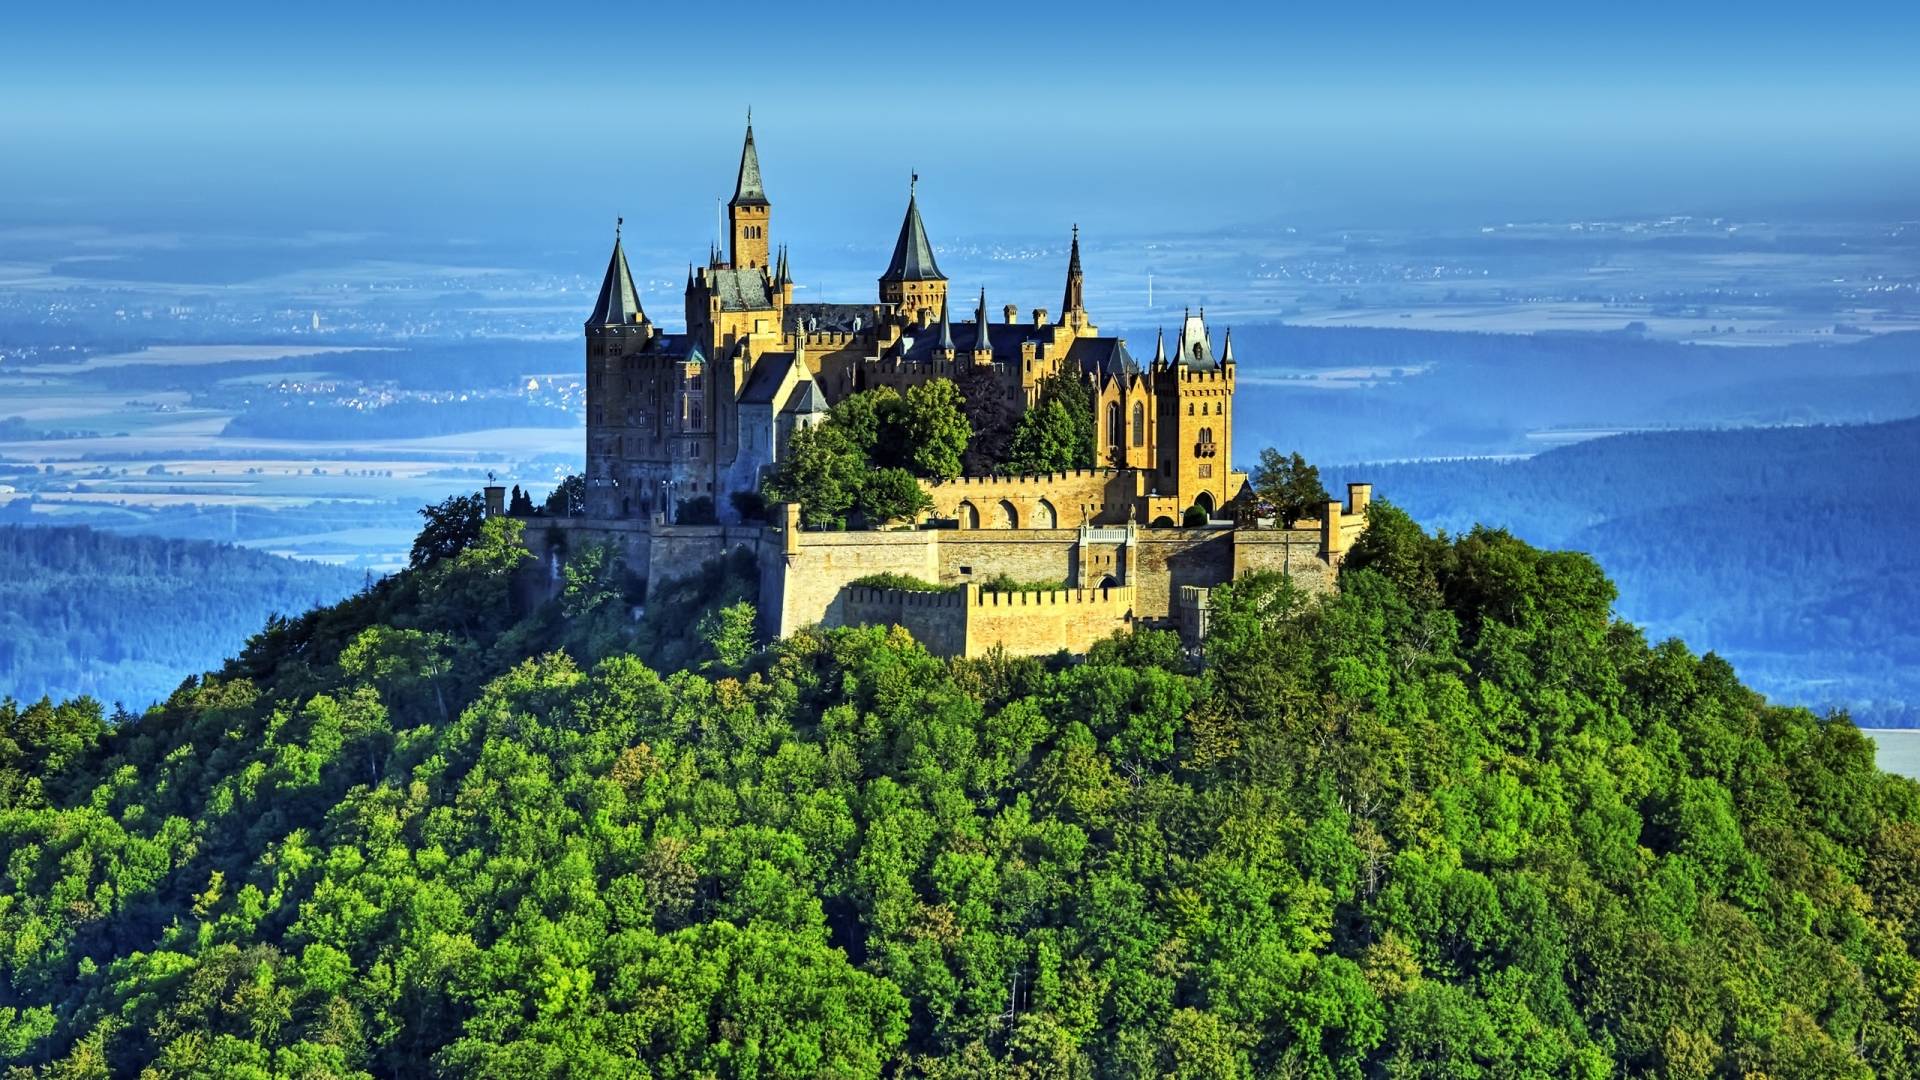 Download Amazing Scenery Castle HD Wallpaper Free By Warnerboutique